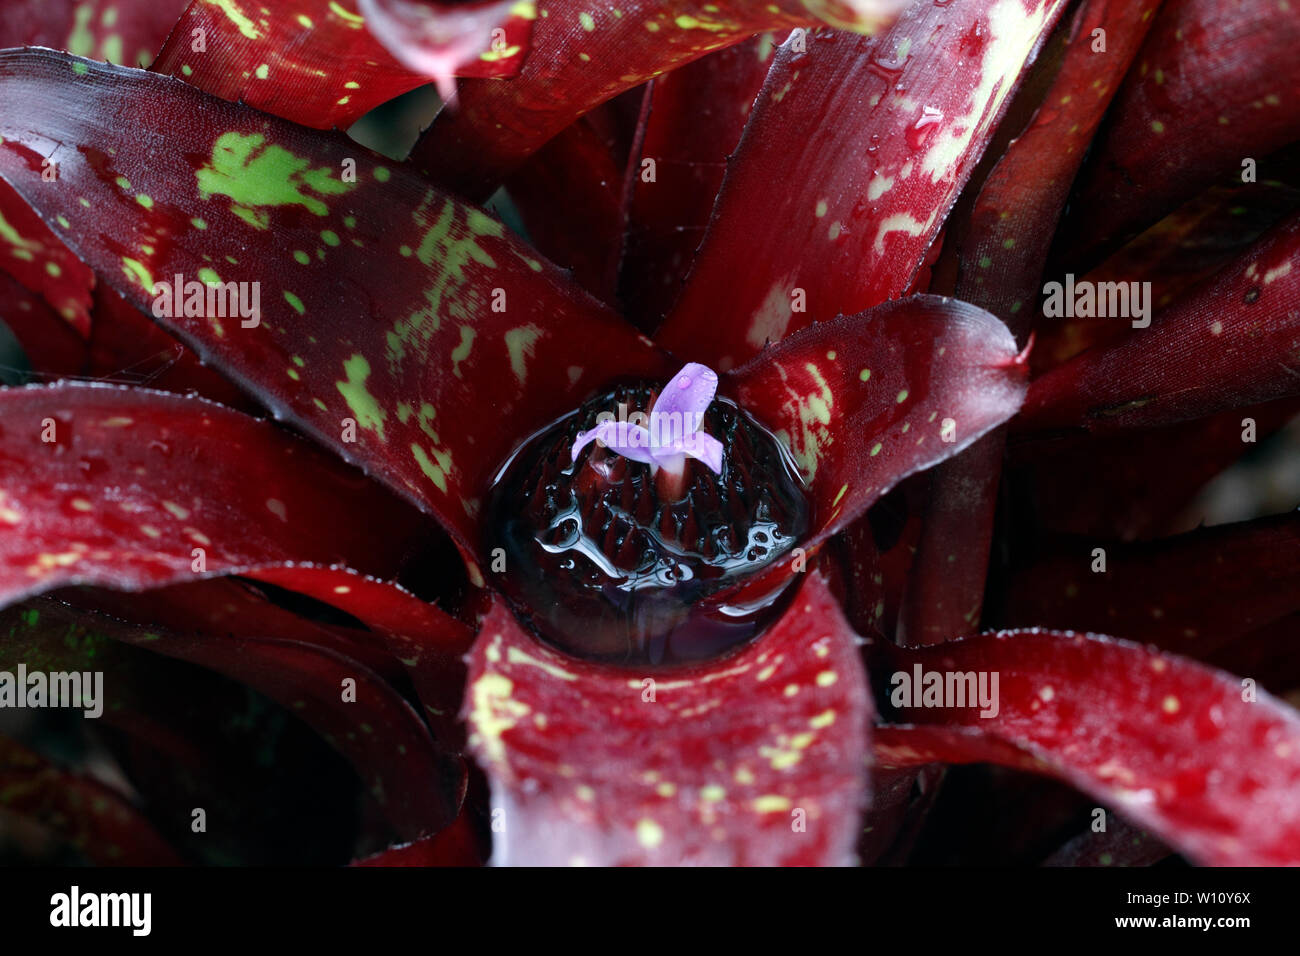 Neoregelia hybrid in purple or lilac flower, against spotted burgundy or maroon leaves. Stock Photo